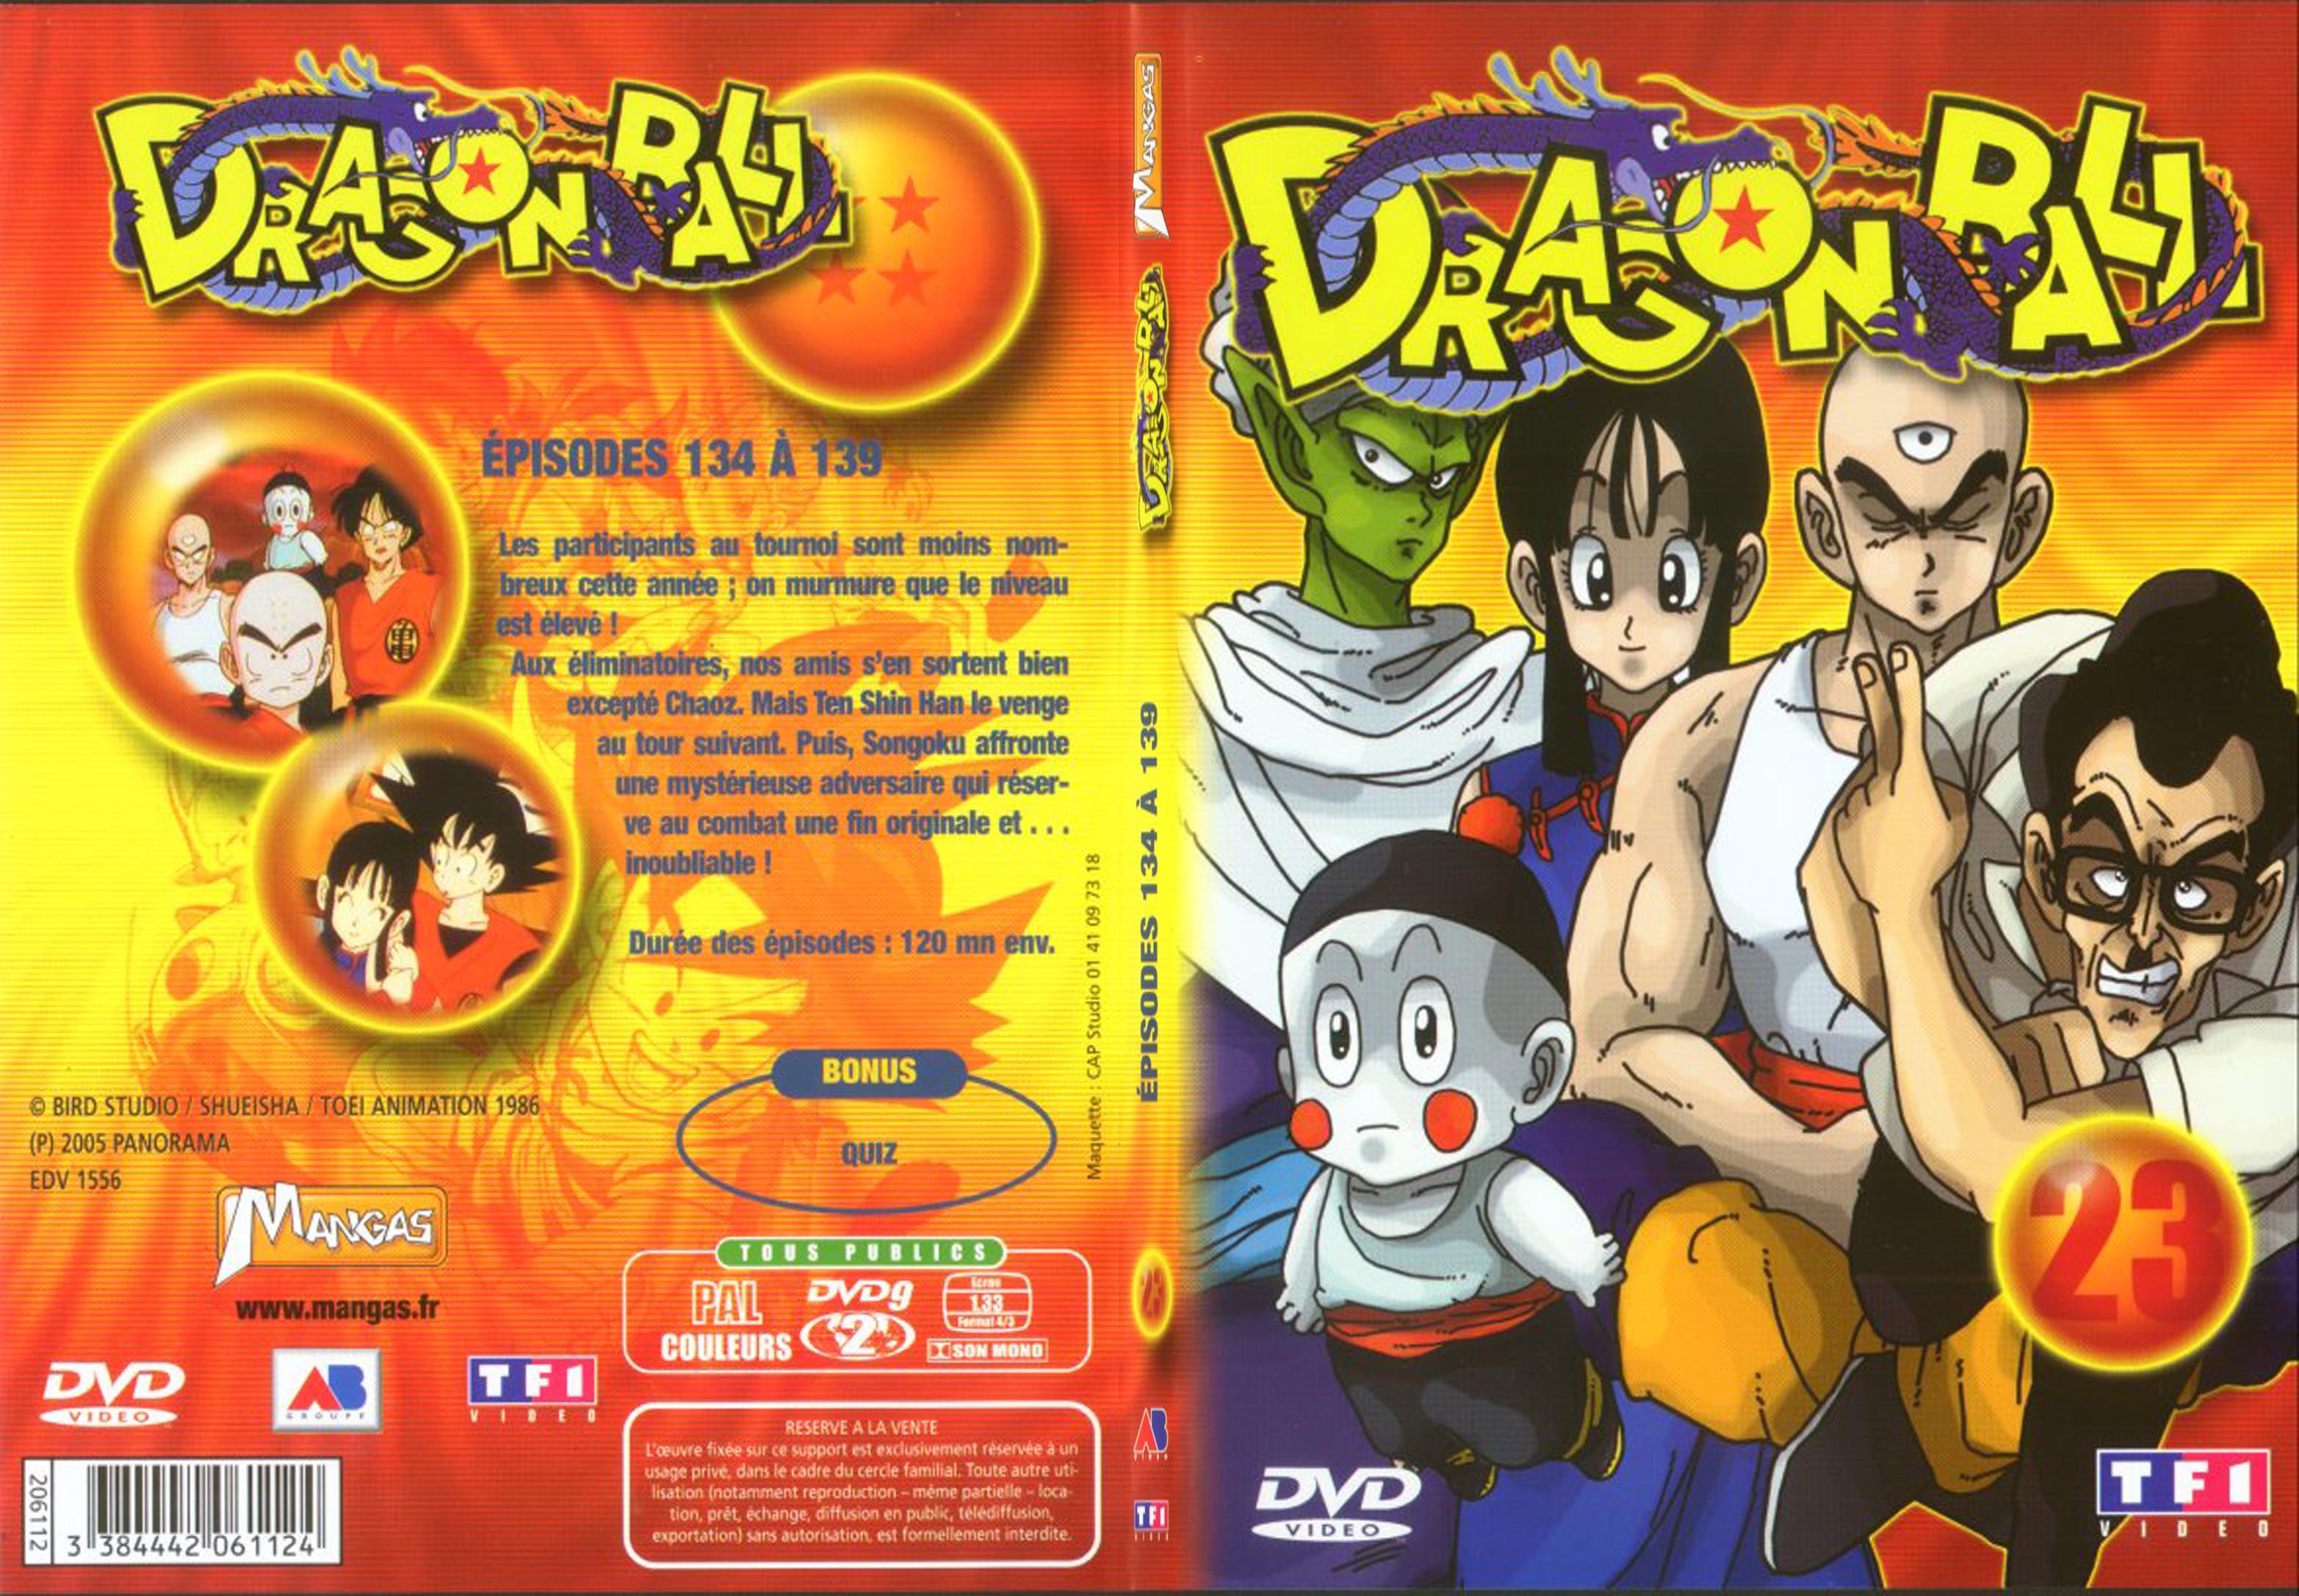 Jaquette DVD Dragon ball vol 23 - SLIM